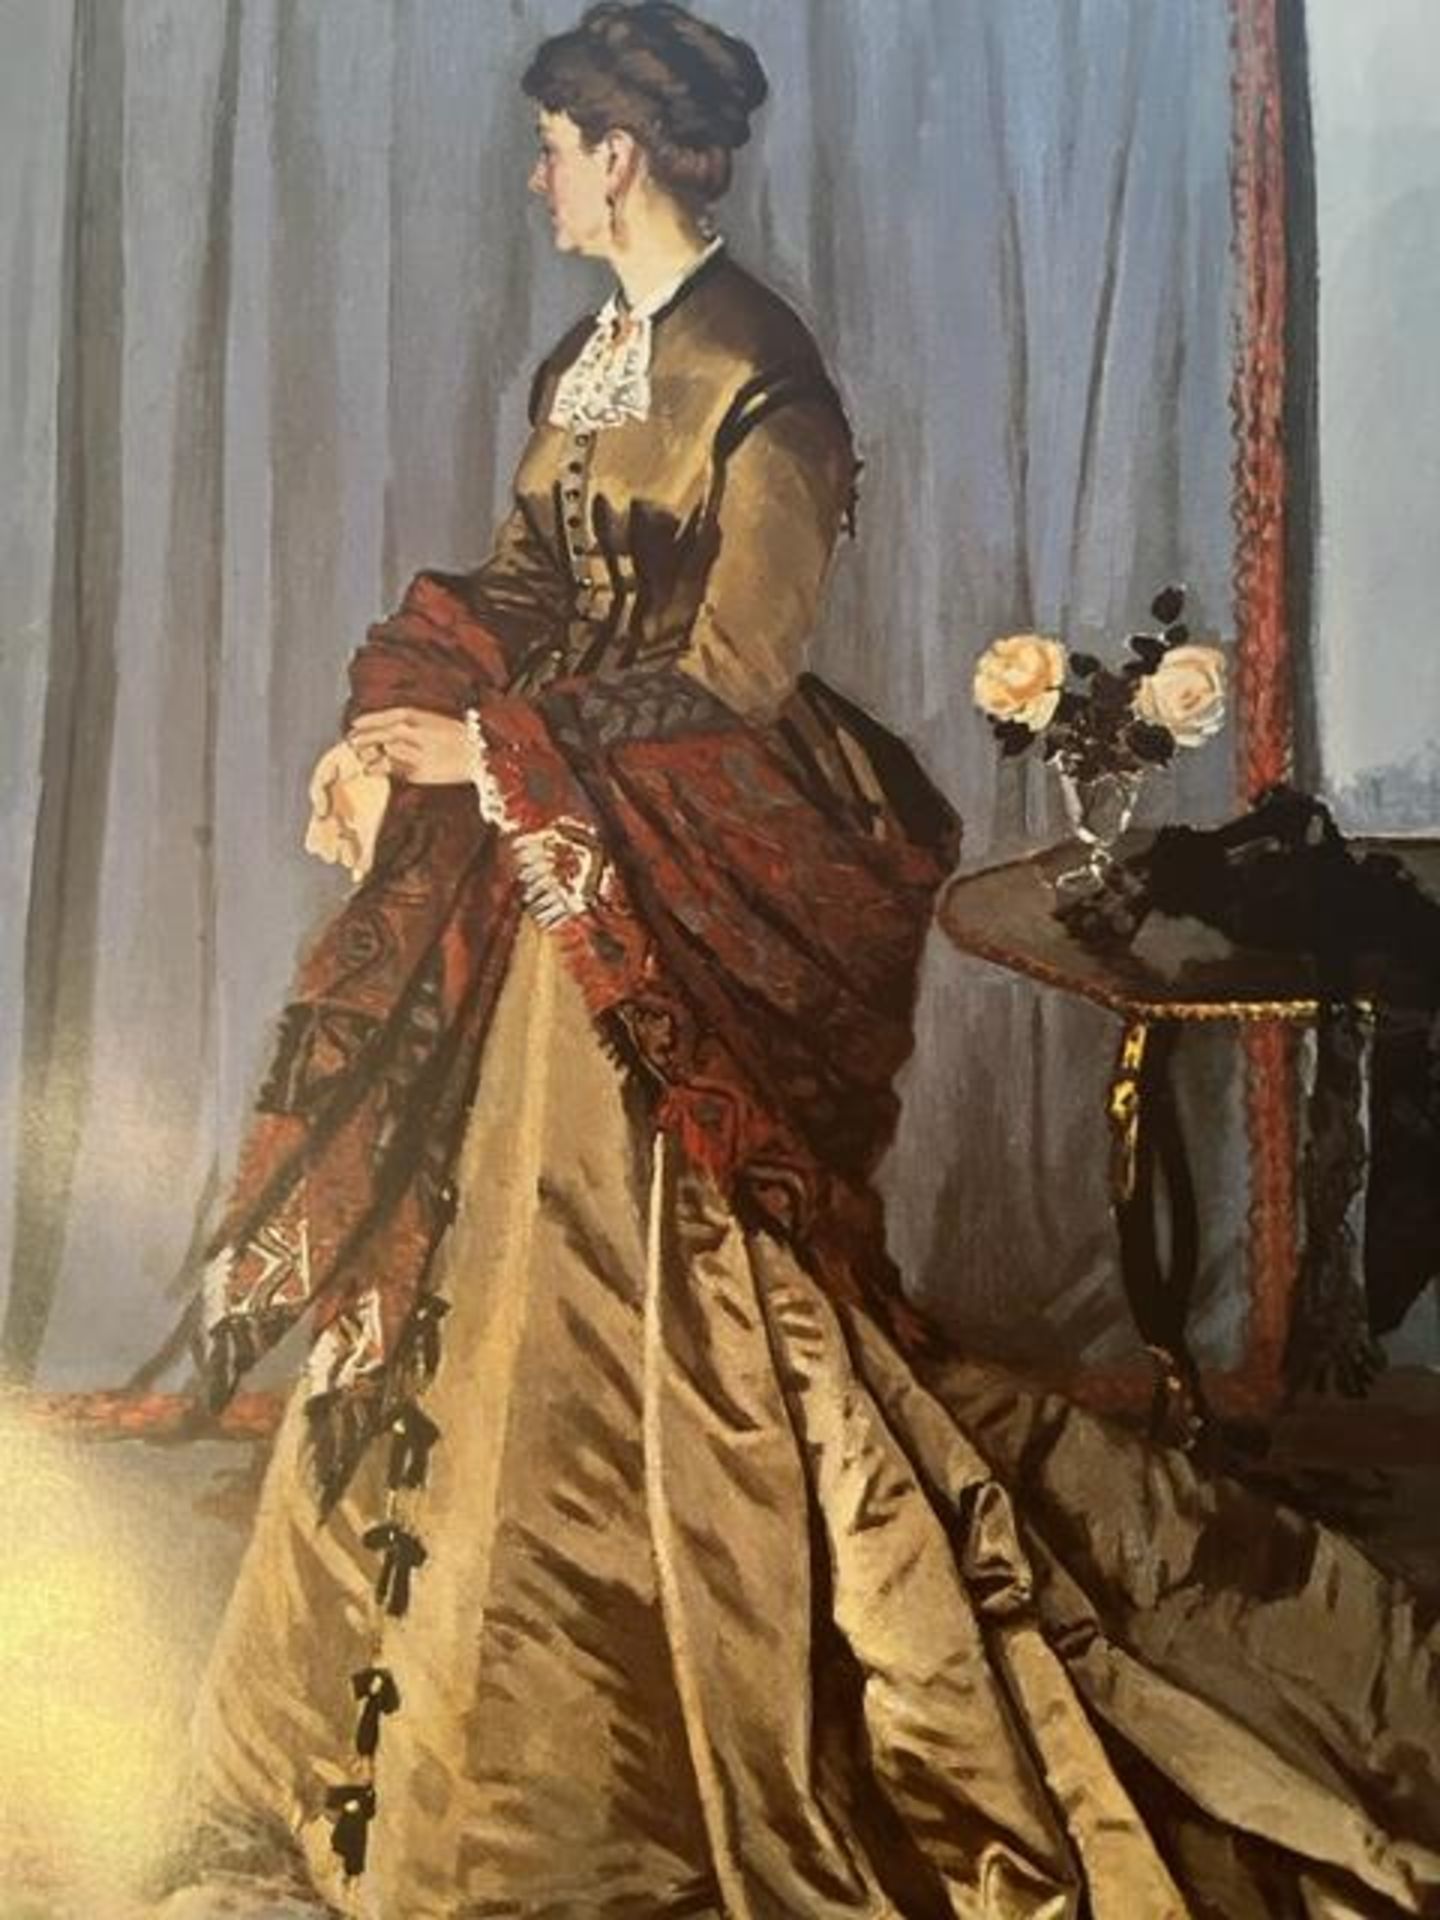 Claude Monet "Mrs. Gaudibert" Print.